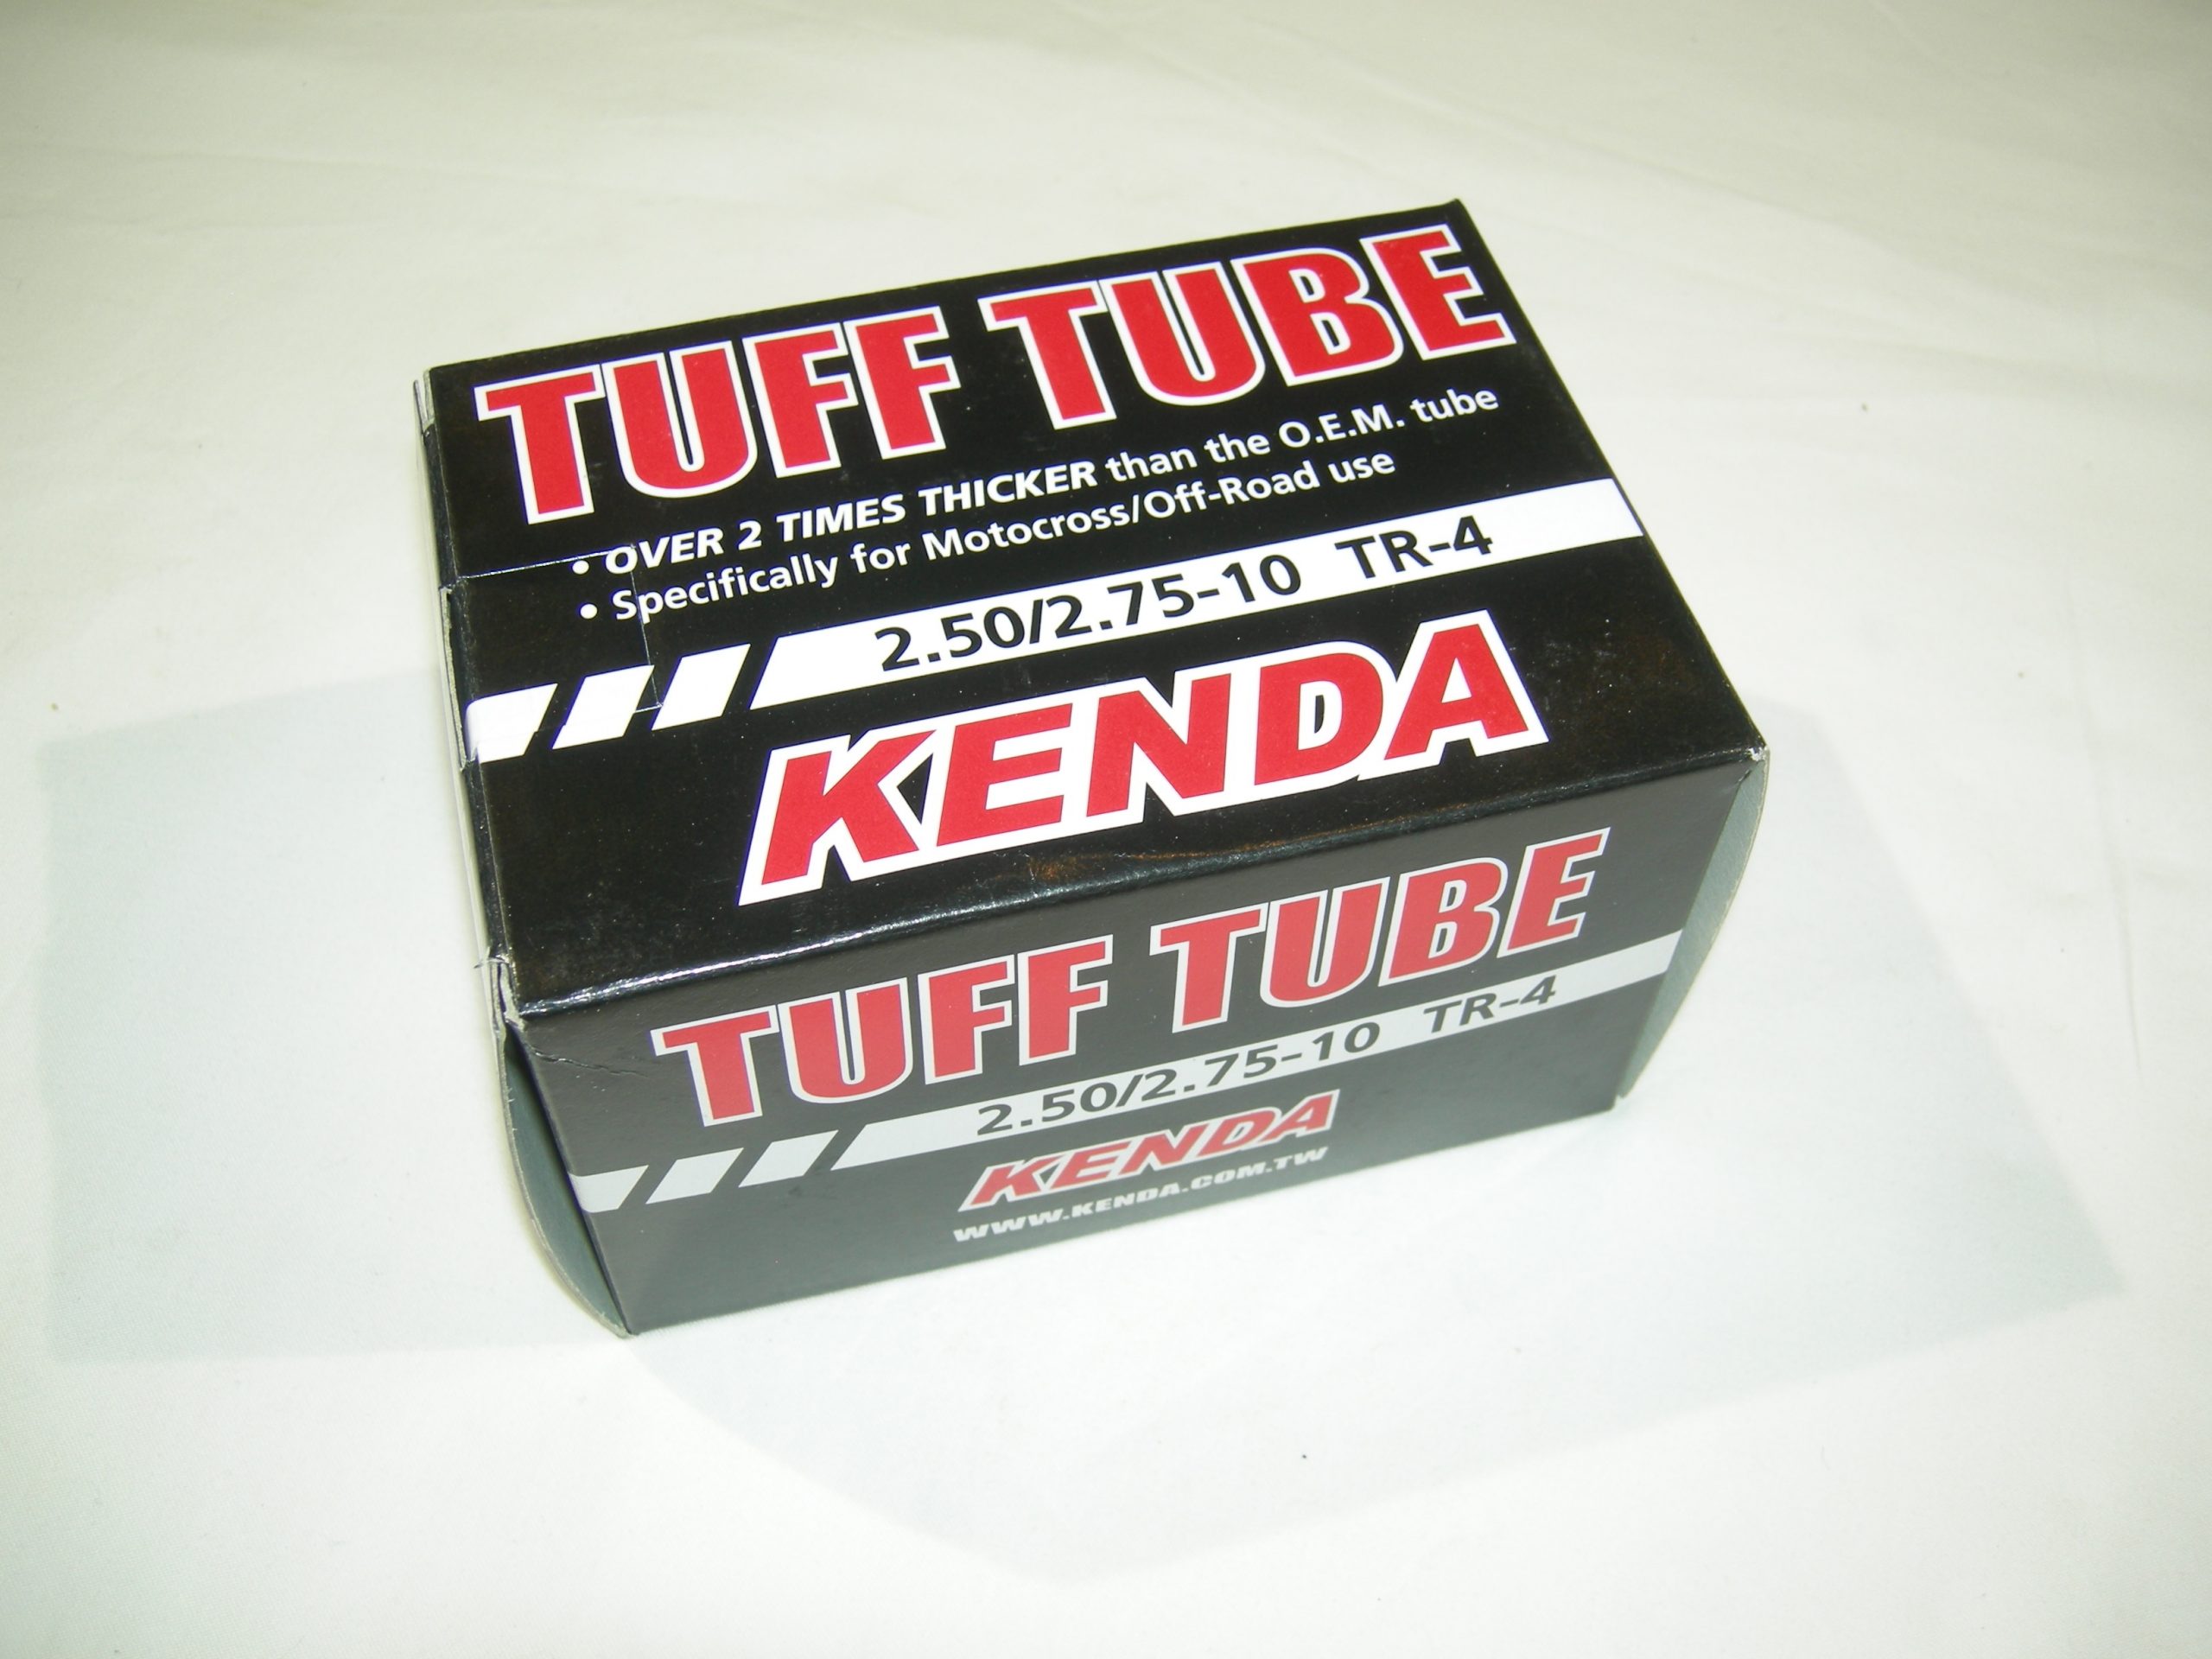 KTM50 Tube Rear, Kenda tuff tube 2.50/2.75 -10-0